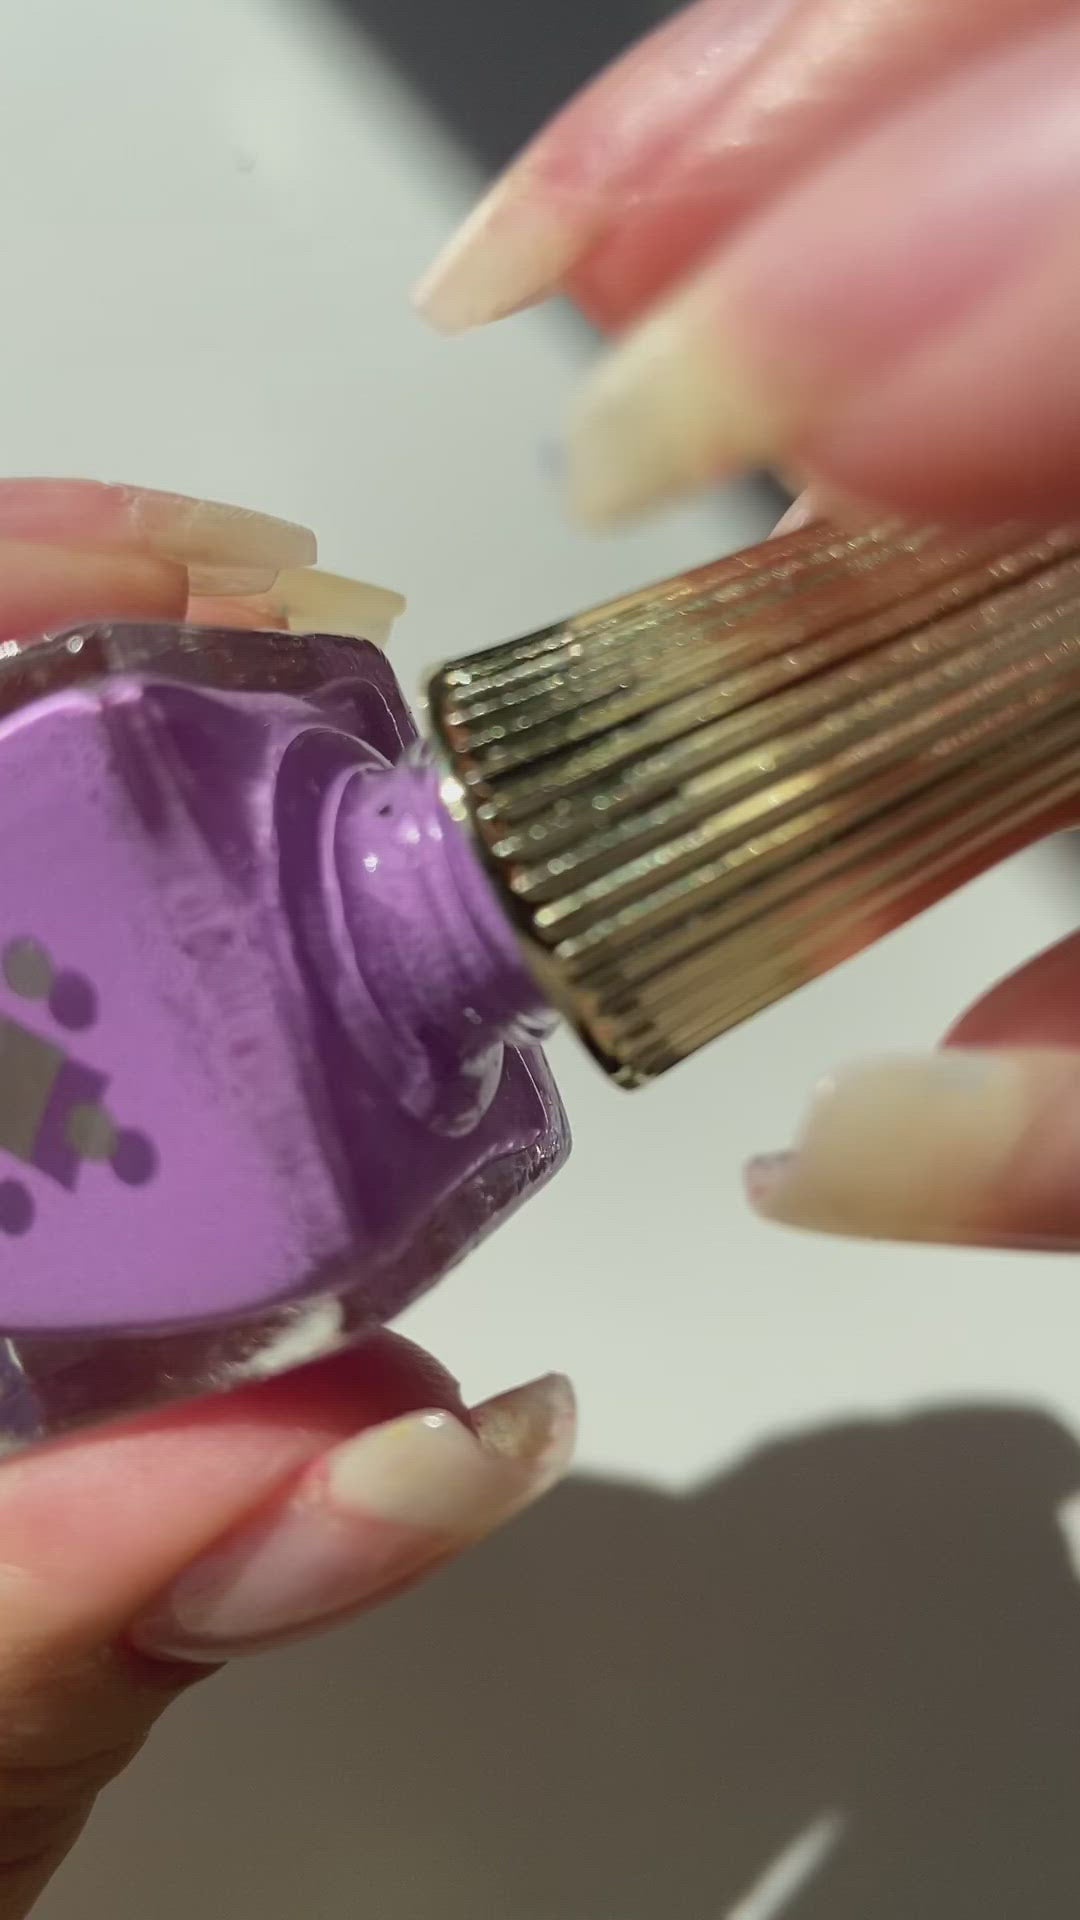 Swatch video of purple nail polish